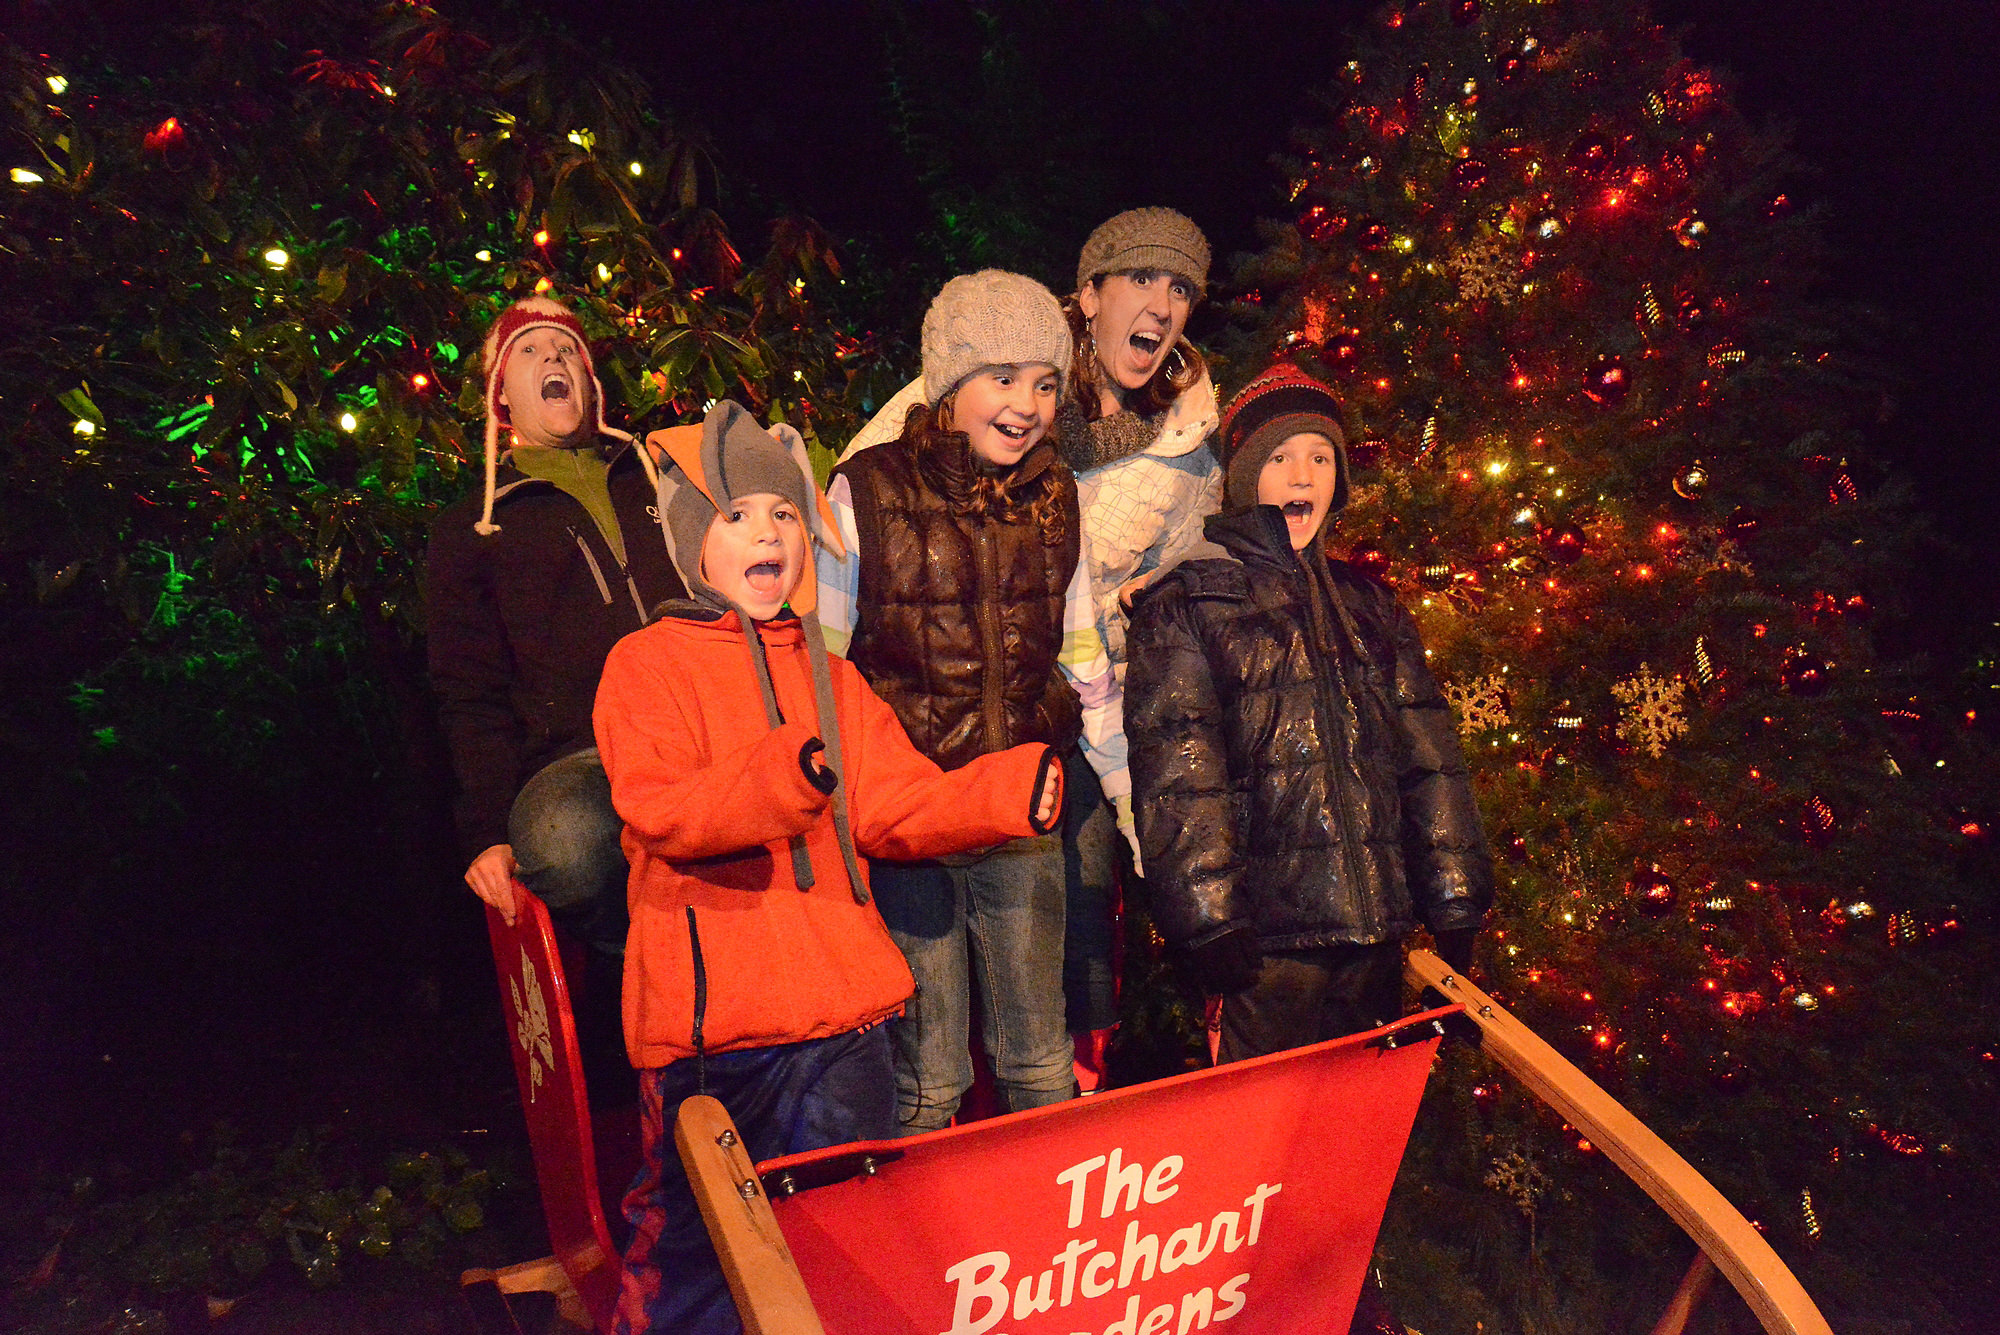 Butchart Gardens Victoria BC Holiday Light Display